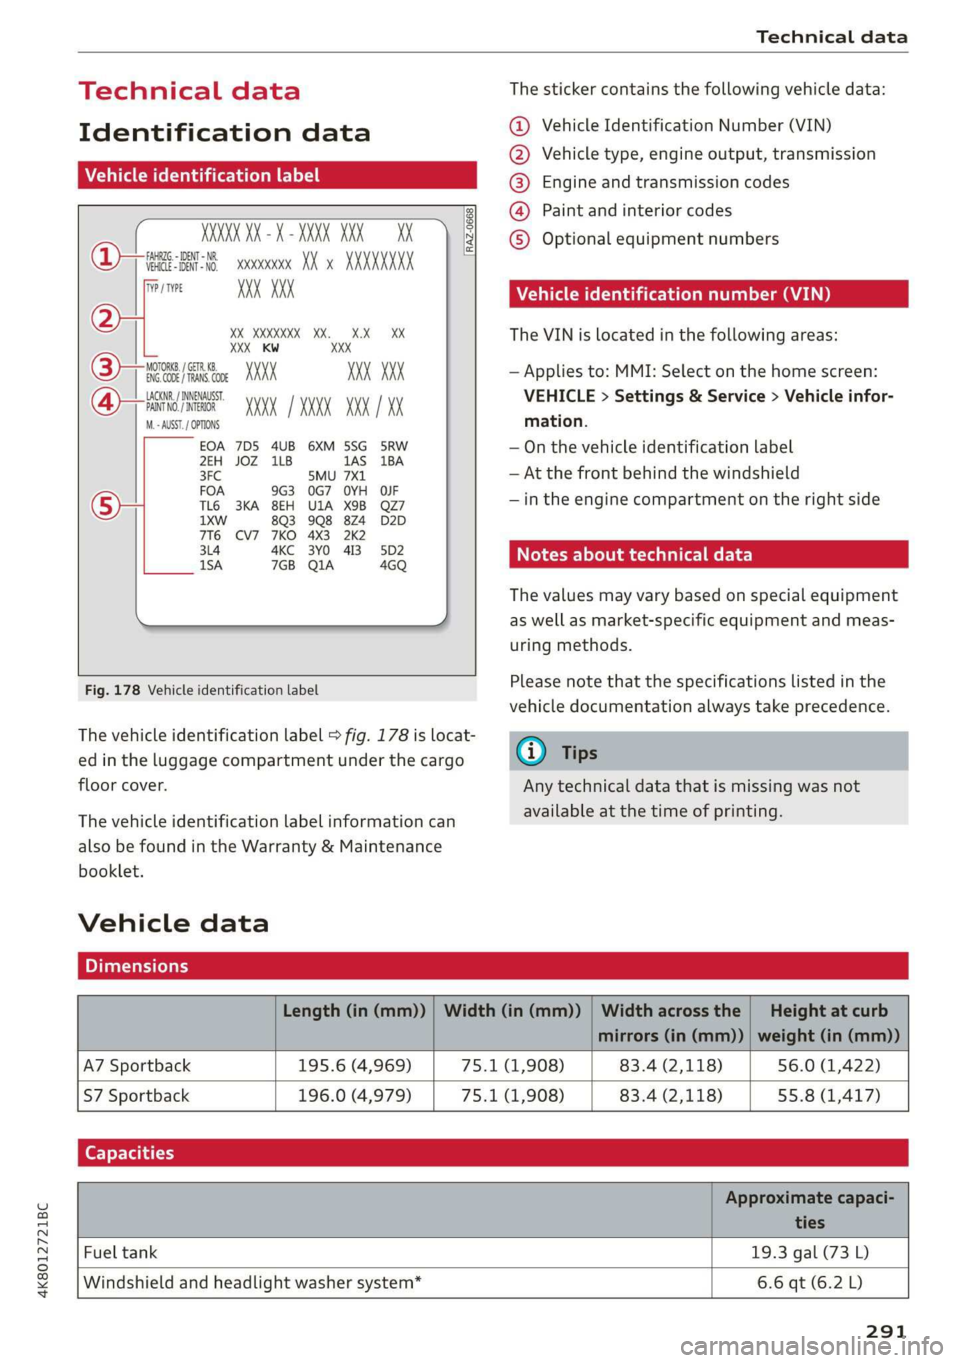 AUDI A7 2020  Owners Manual 4K8012721BC 
Technical data 
  
Technical data 
Identification data 
Vehicle identification label 
XXXXX XX =X = XXXX XXX XX 
(Daa aa xxxxxxxx XX x XXXXXXXK 
  
RAZ-0668 
| pein AK 
Q5 a Beh XX 
(B)--